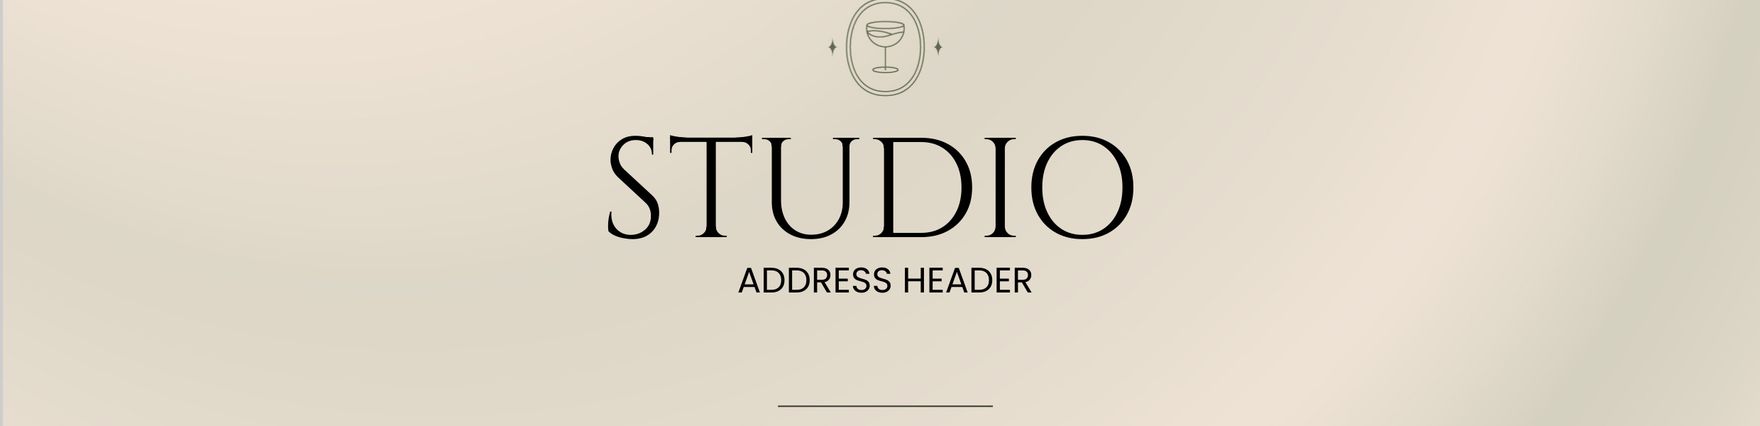 Studio Address Header Template